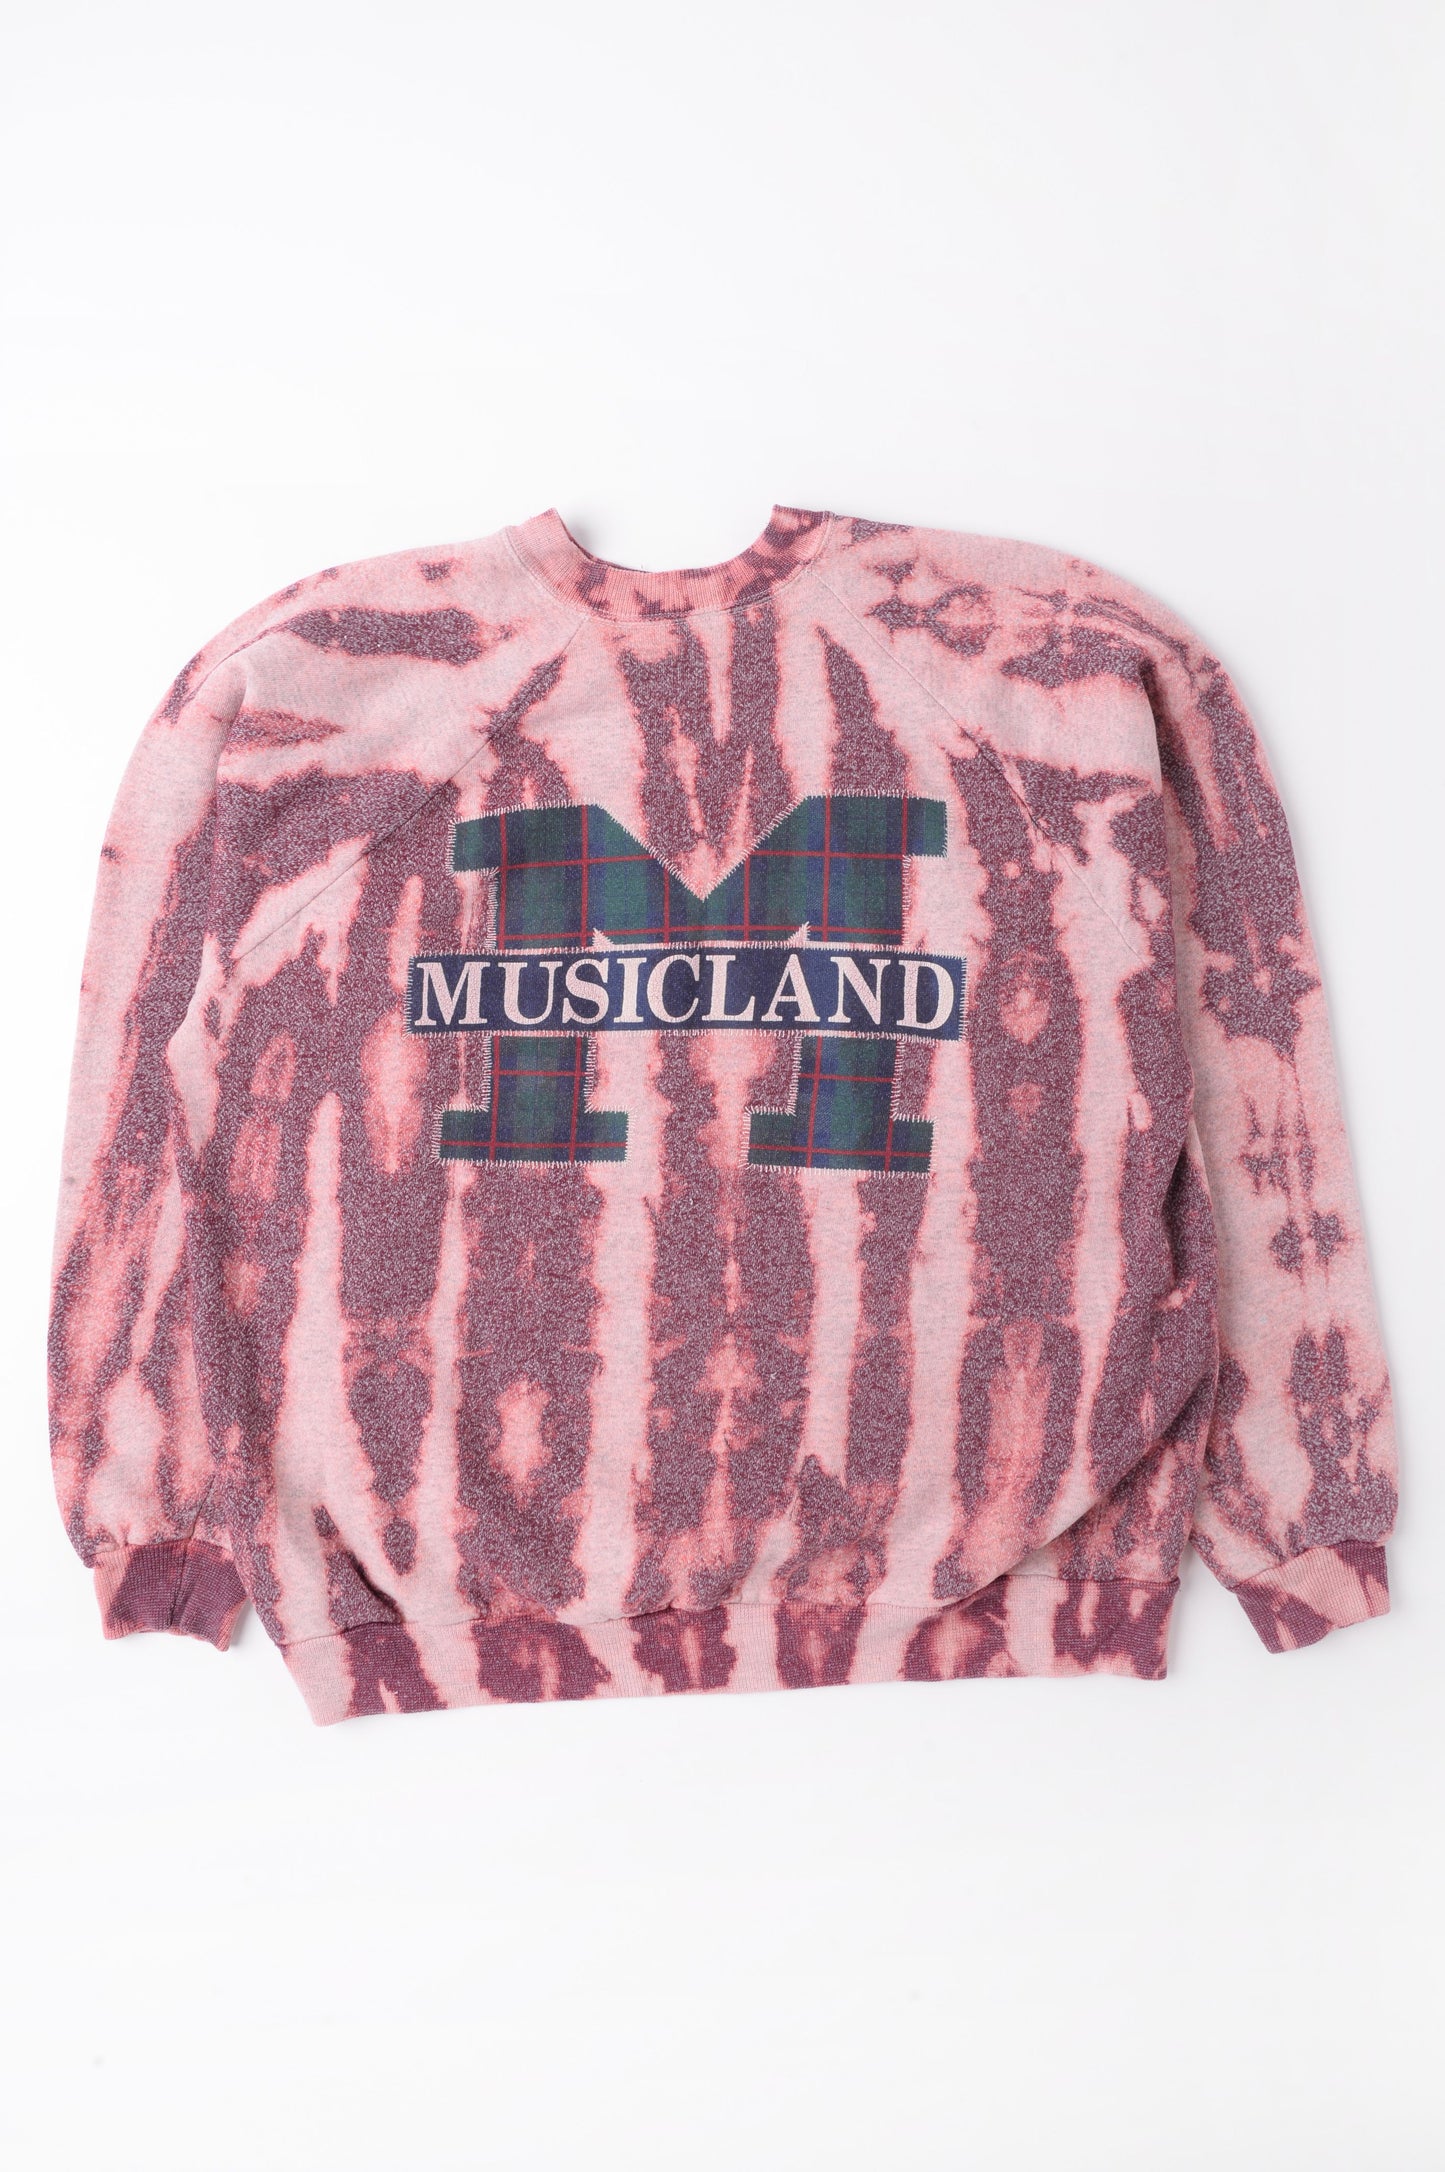 Musicland Tie Dye Sweatshirt